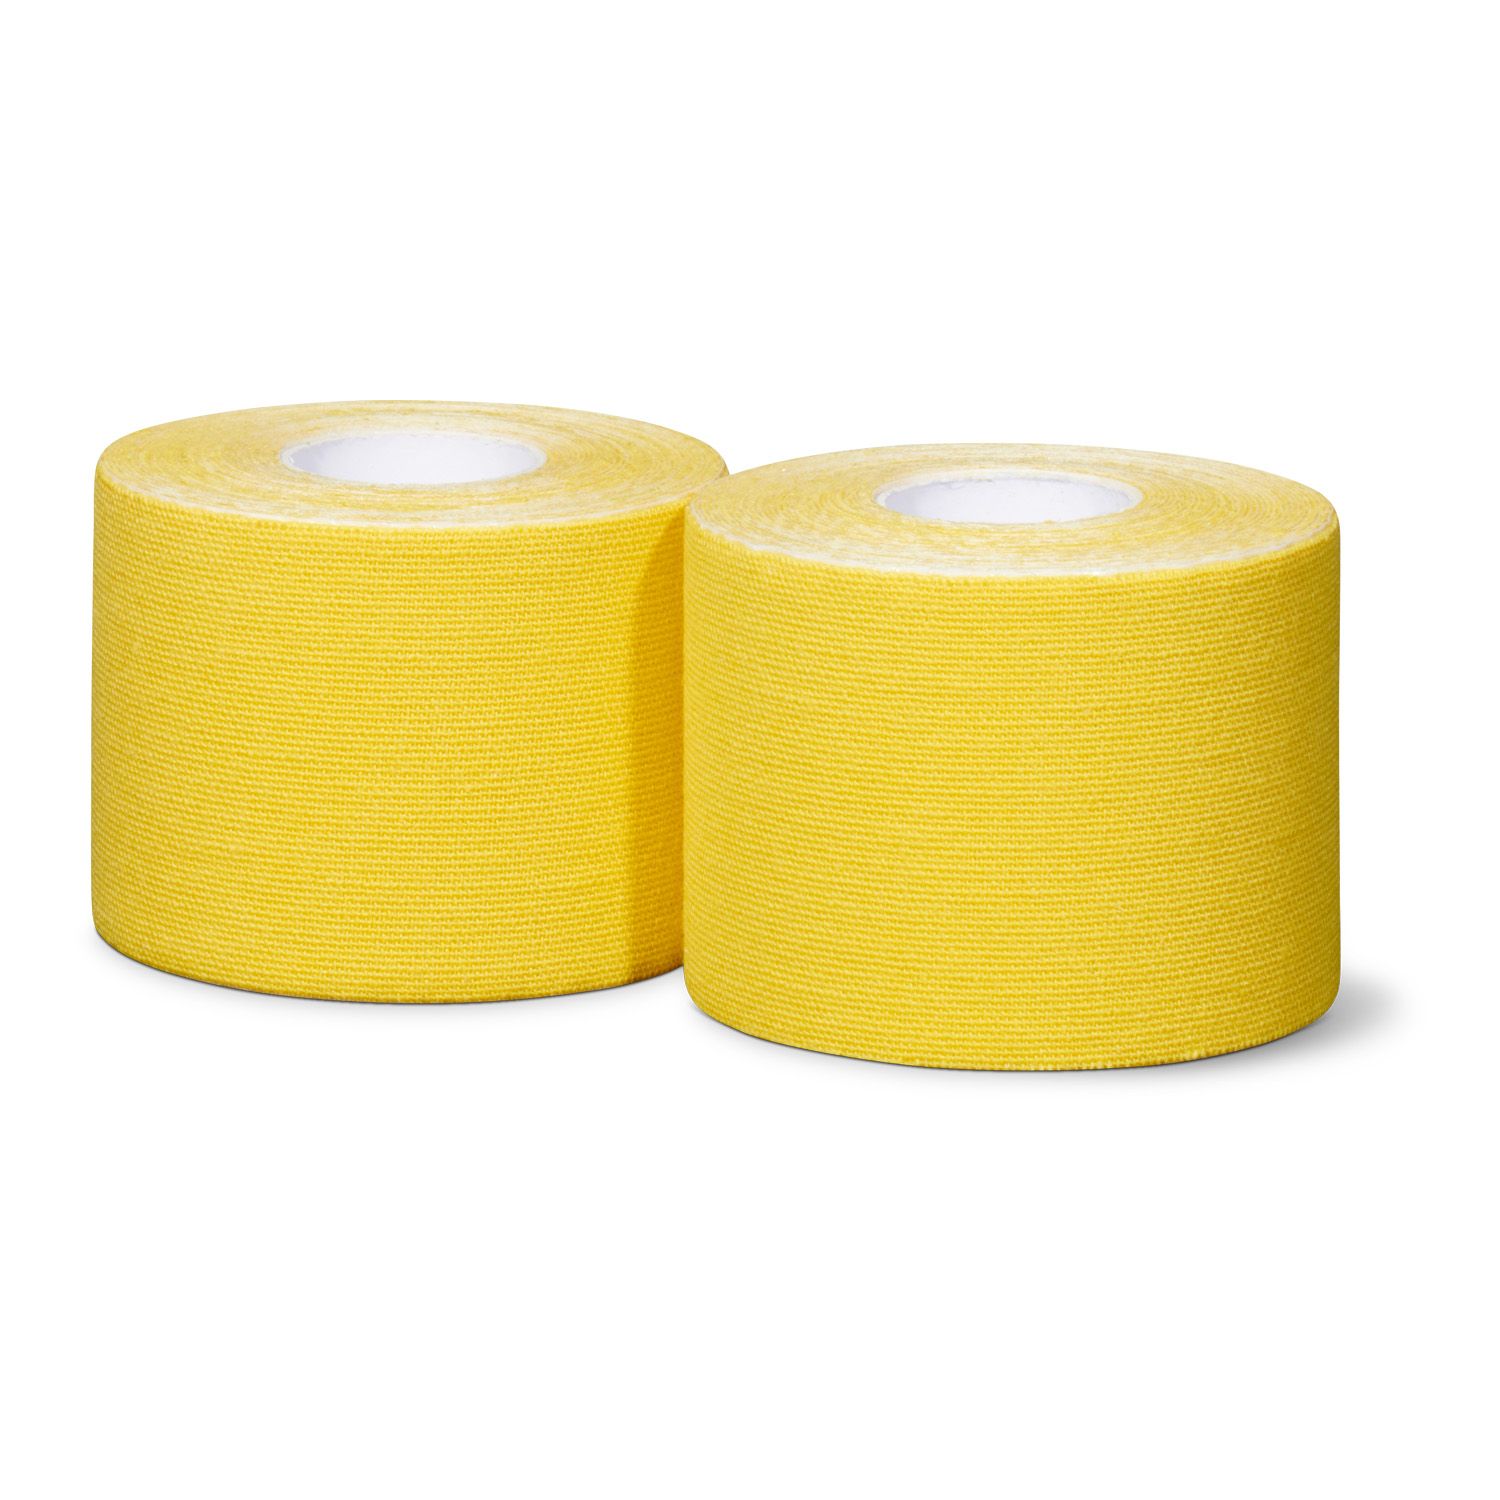 gladiator sports kinesiology tape twelve rolls yellow